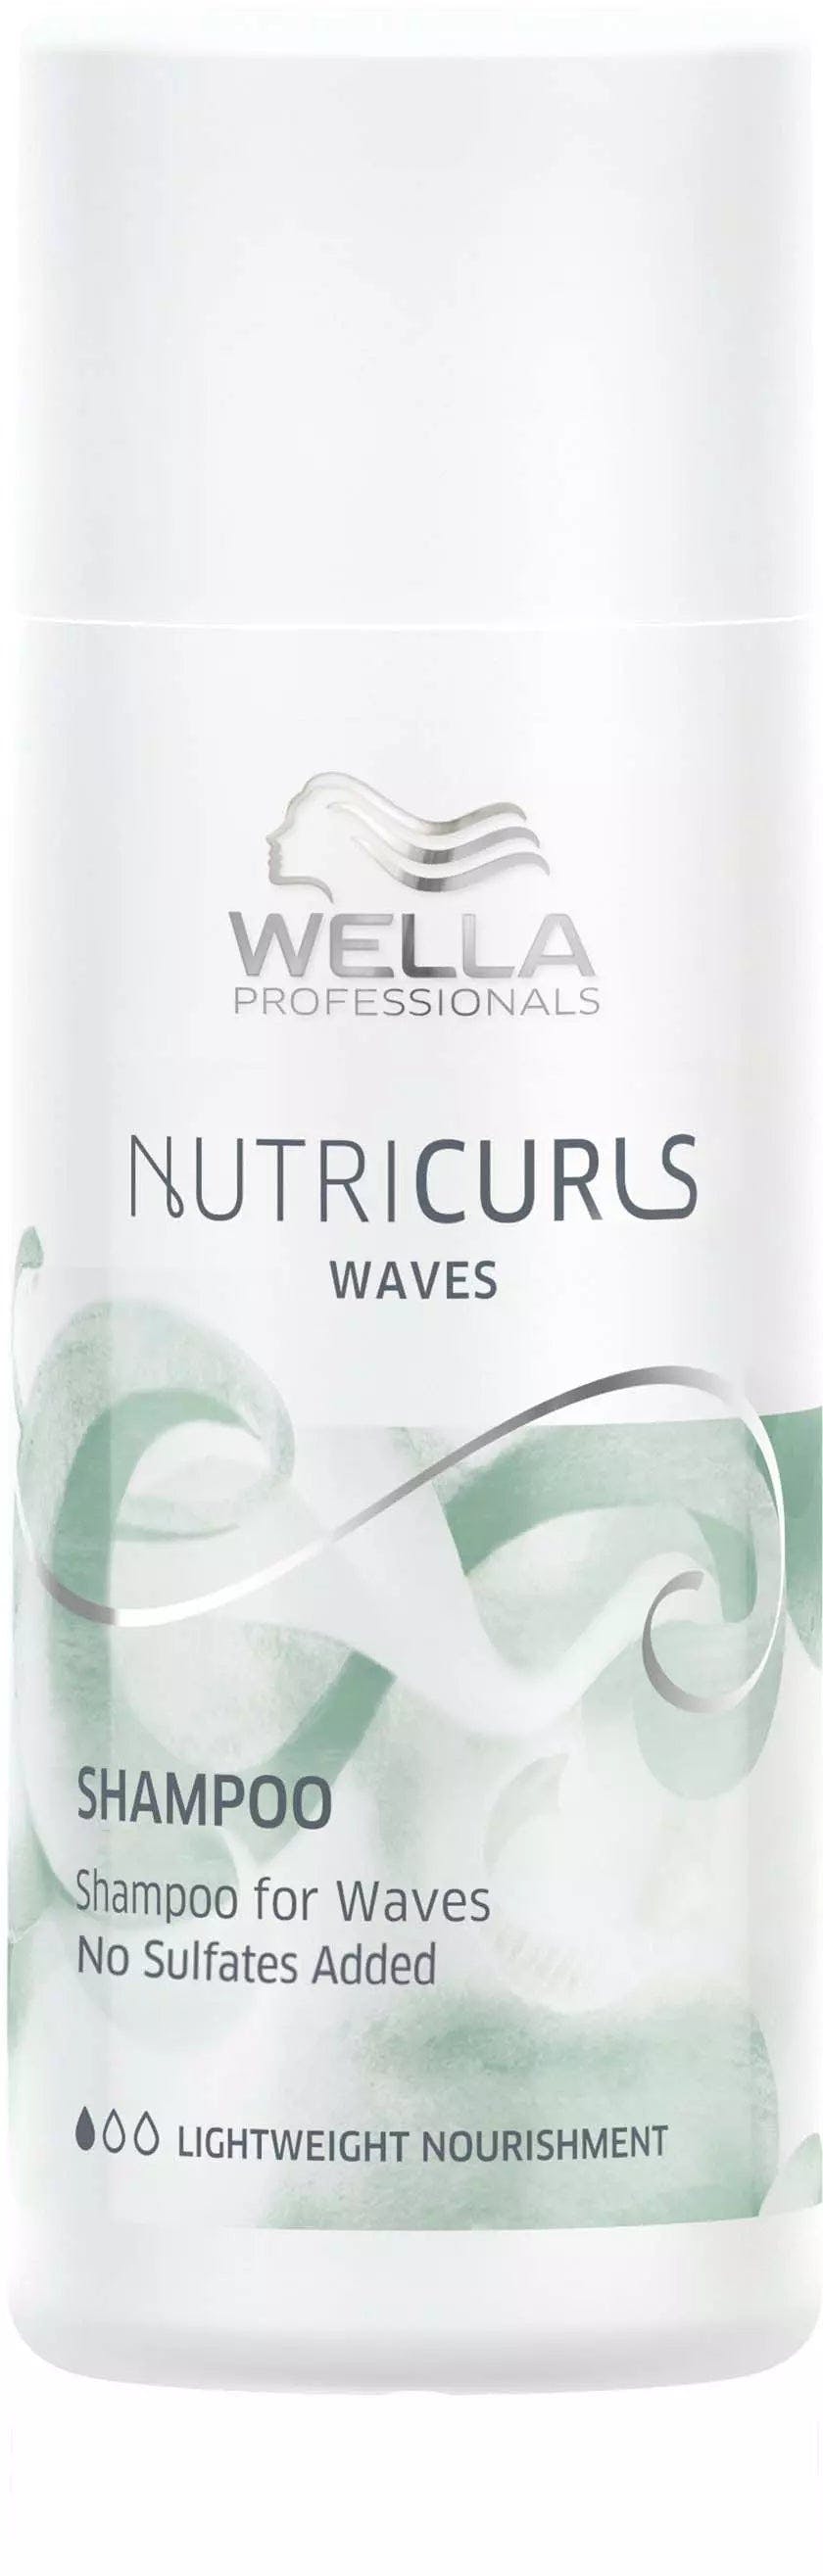 Wella Professionals Nutricurls Waves Shampoo 50ml